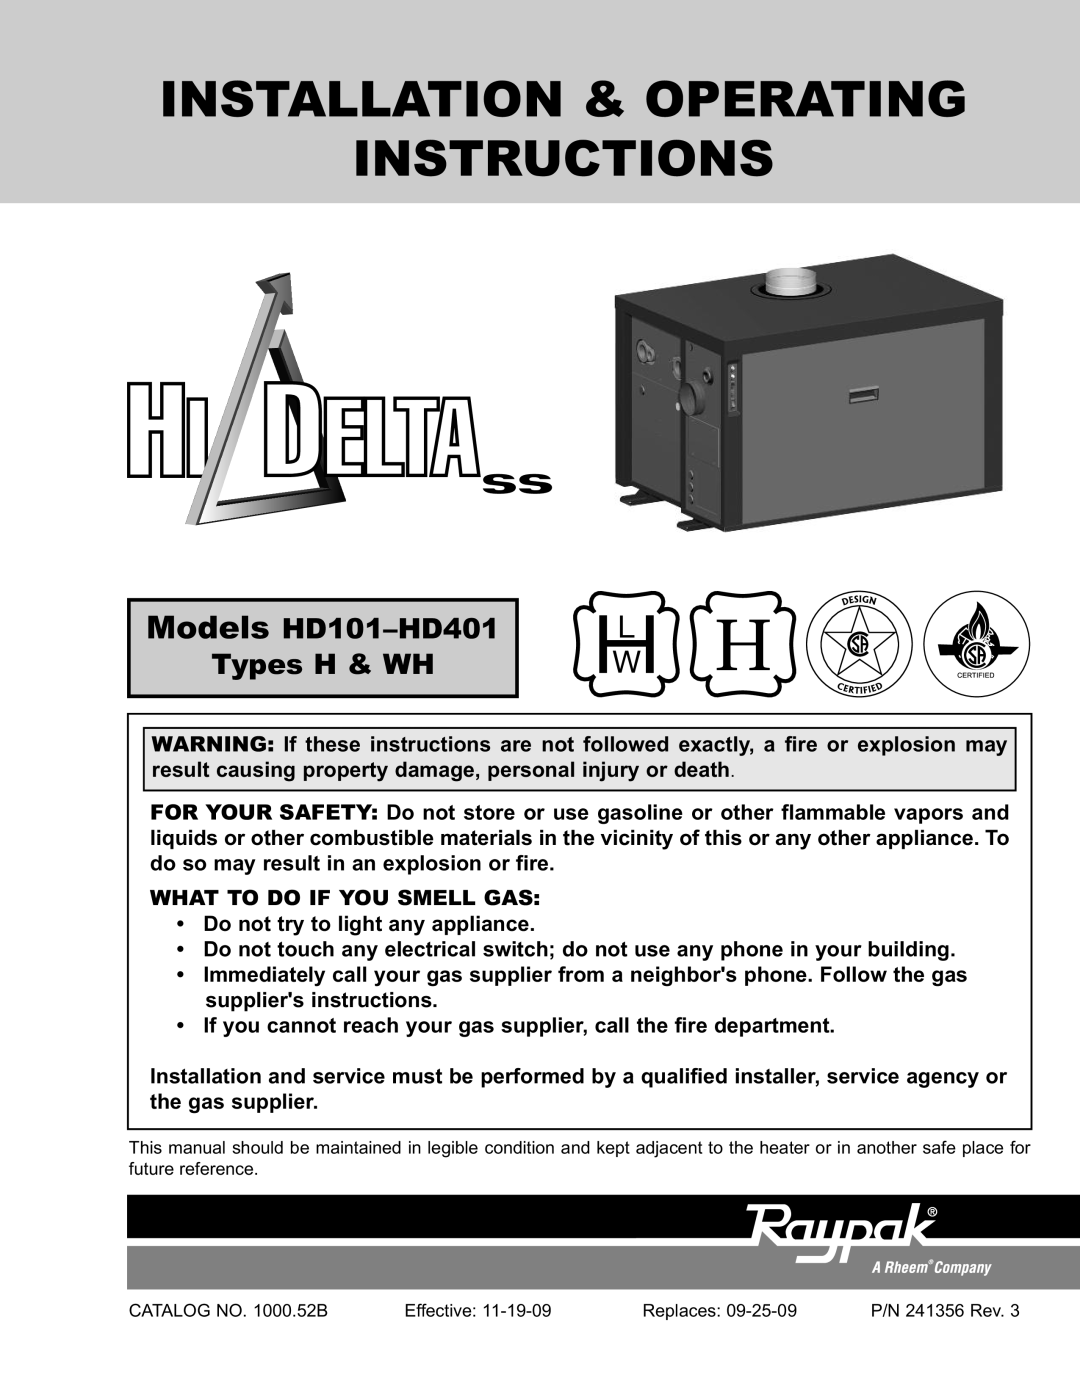 Raypak manual User’S Information Manual, Models HD101-HD401 Type H 